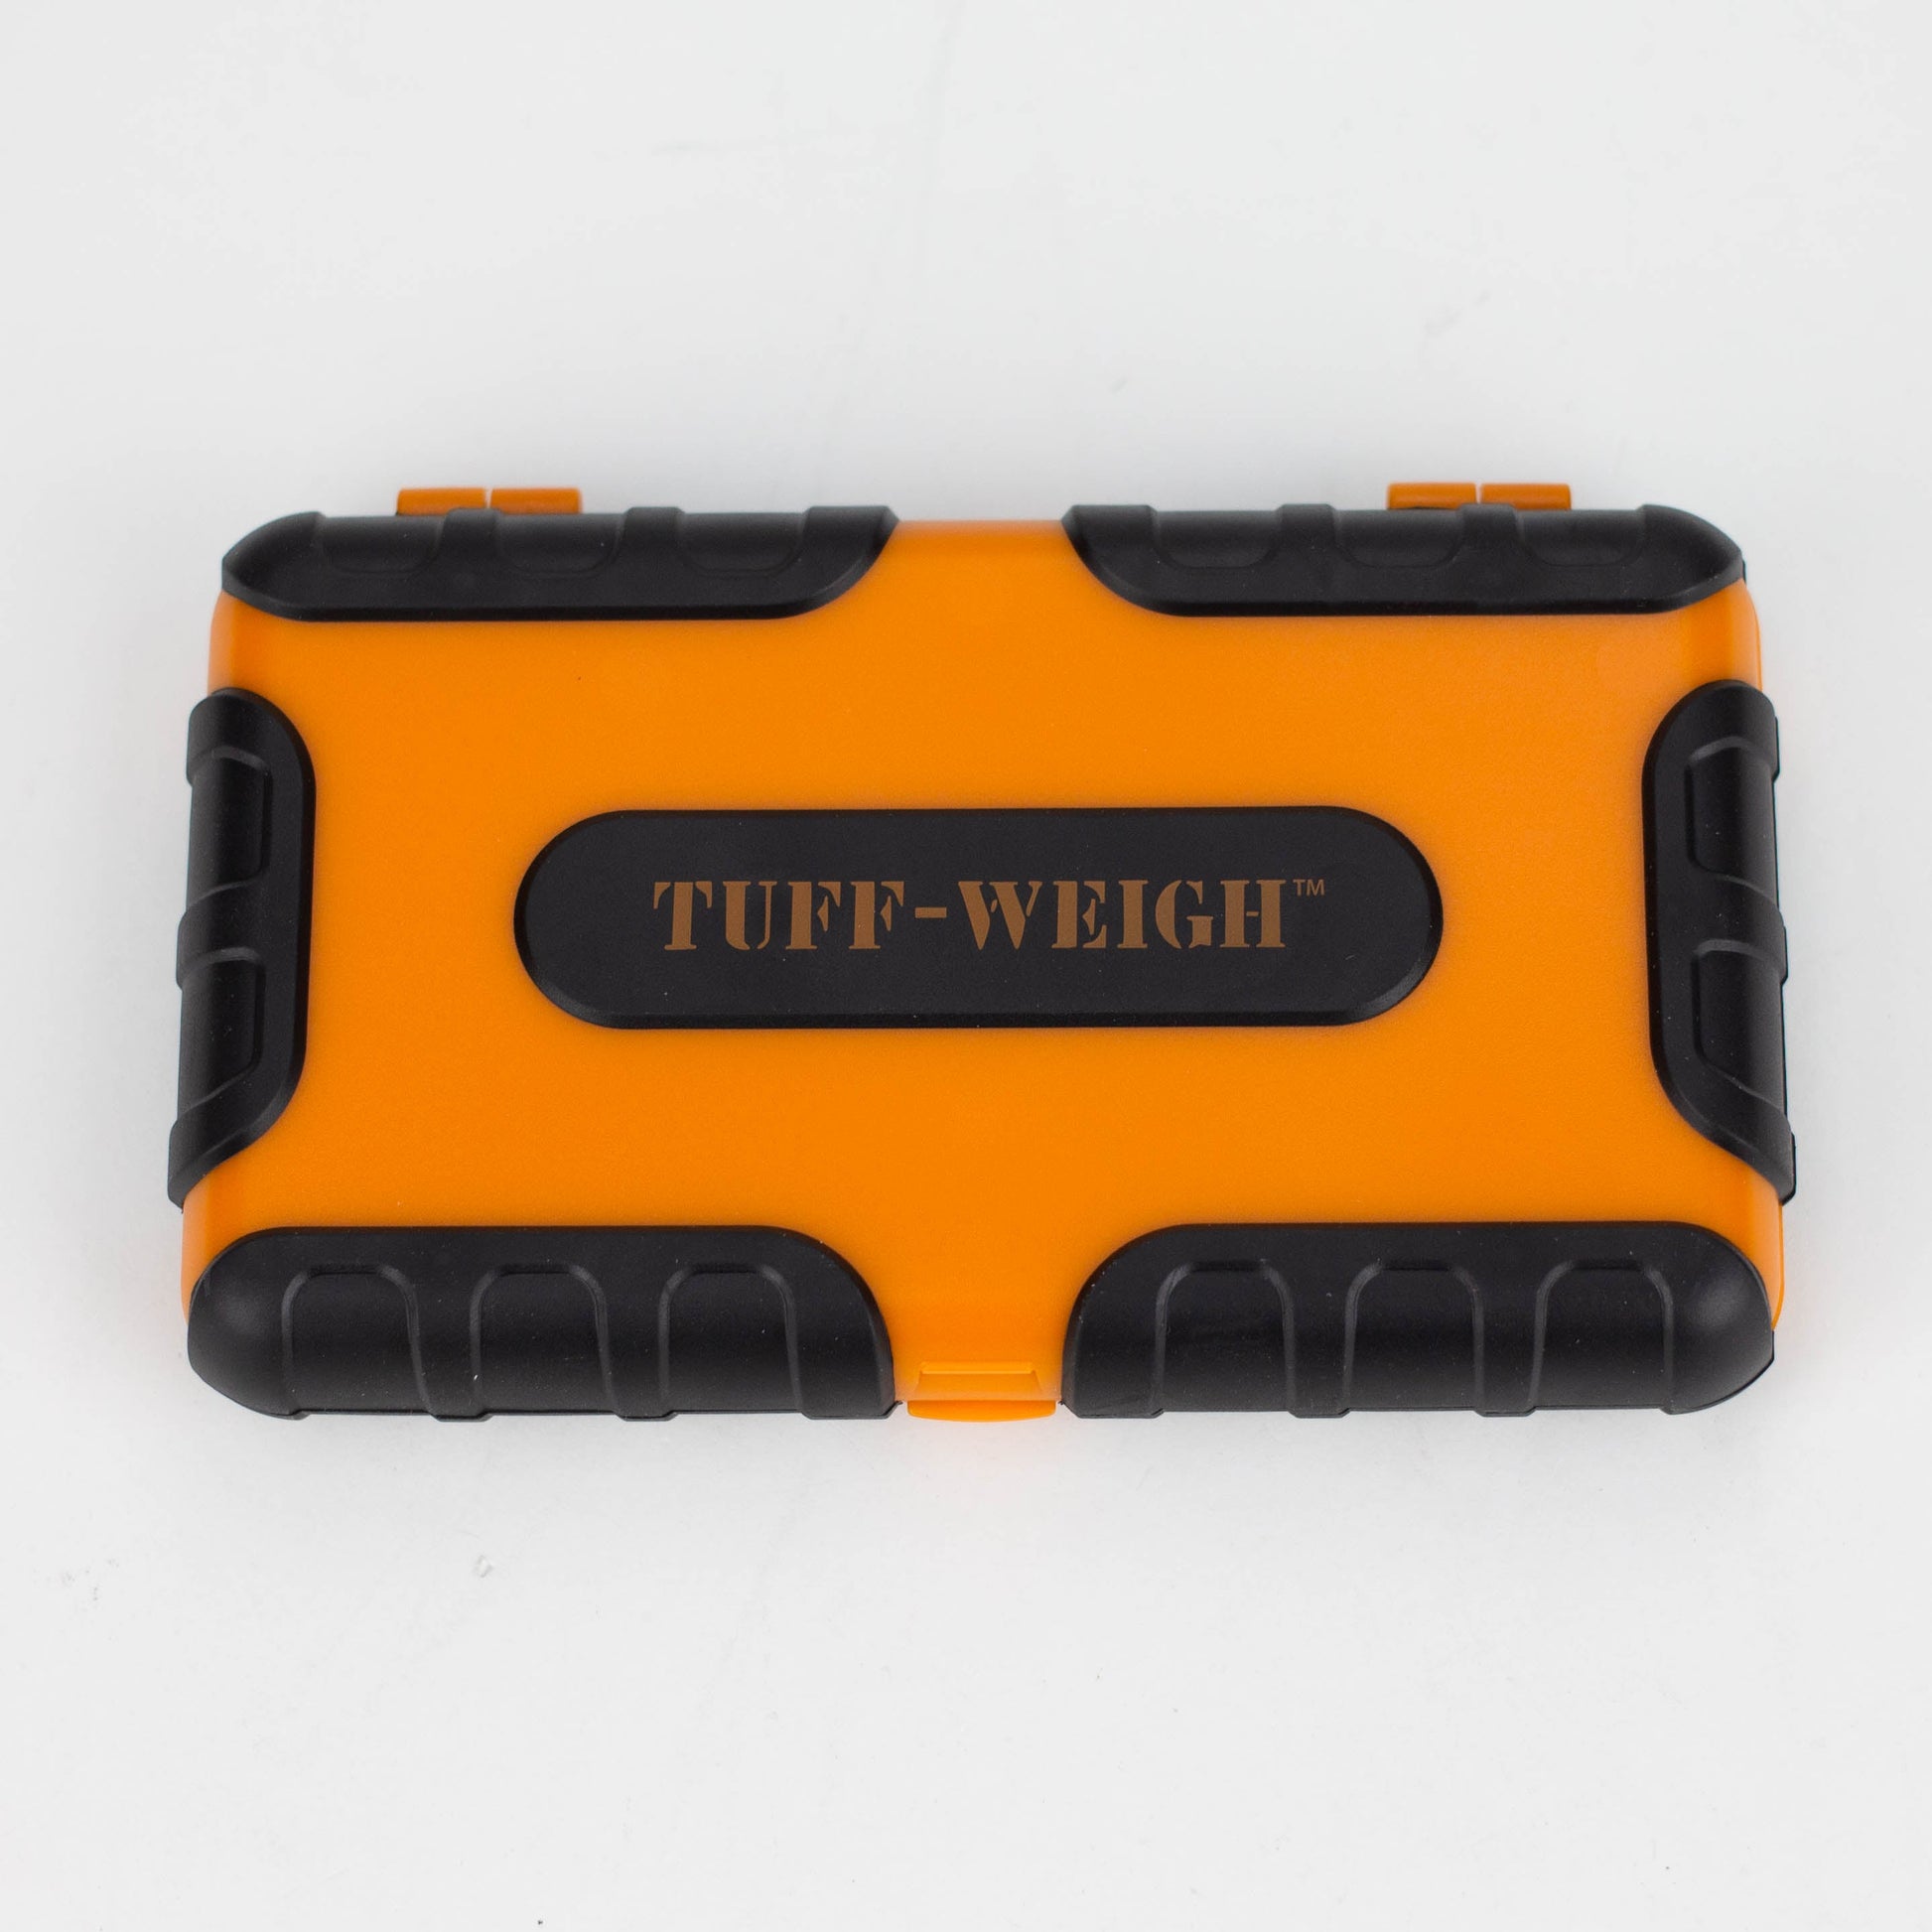 Truweigh | Tuff-Weigh Scale - 200g x 0.01g_5